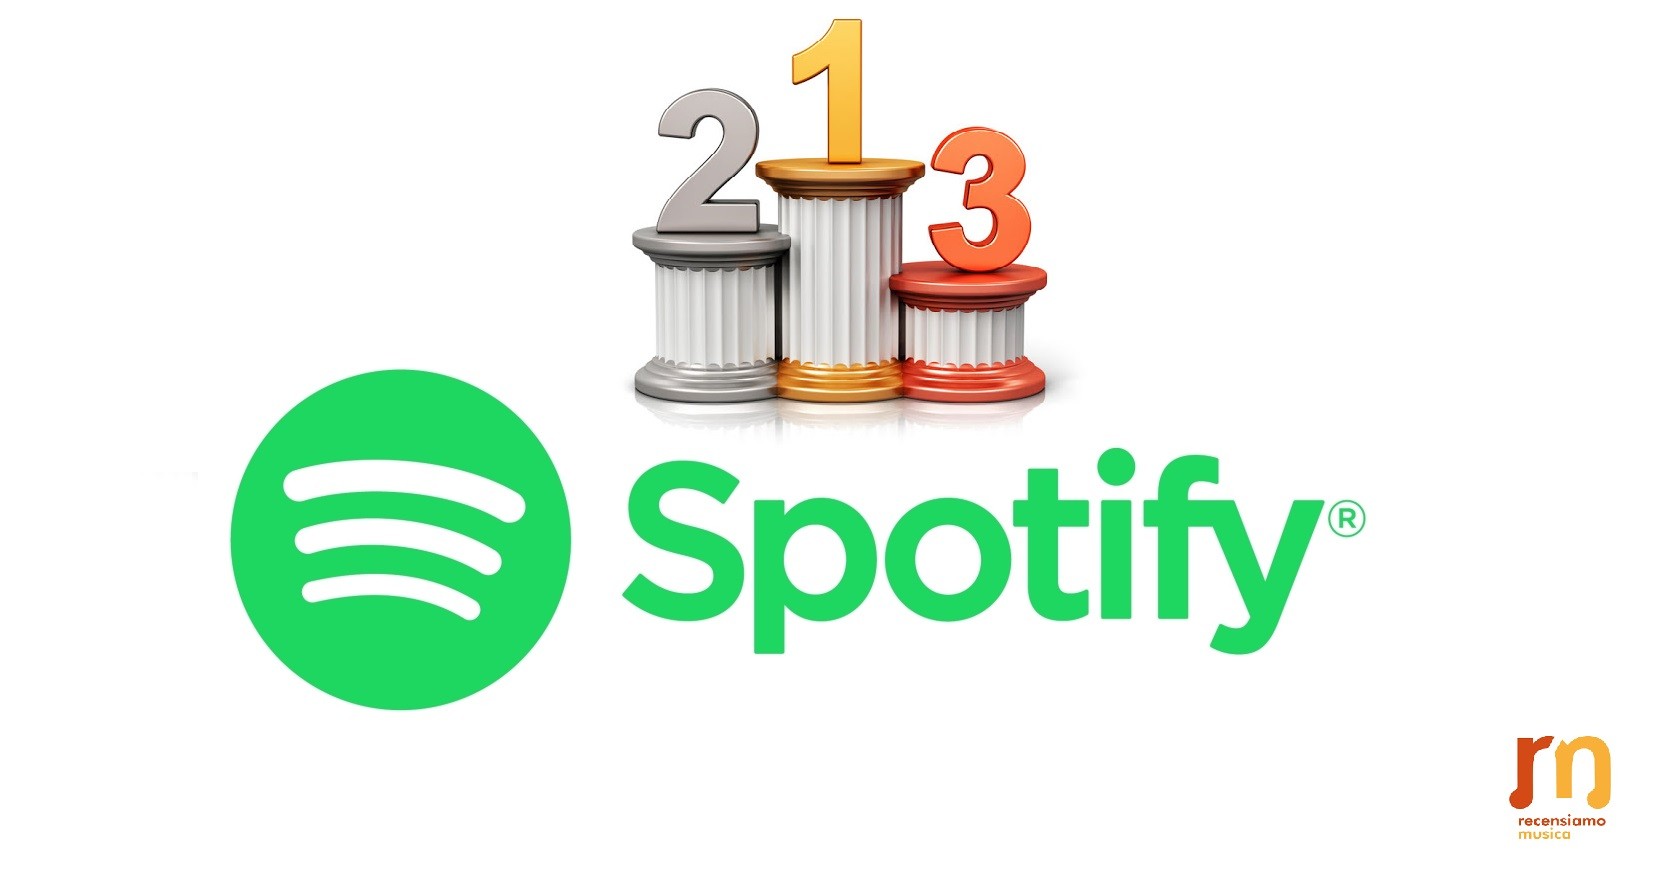 Classifica album più ascoltati su Spotify